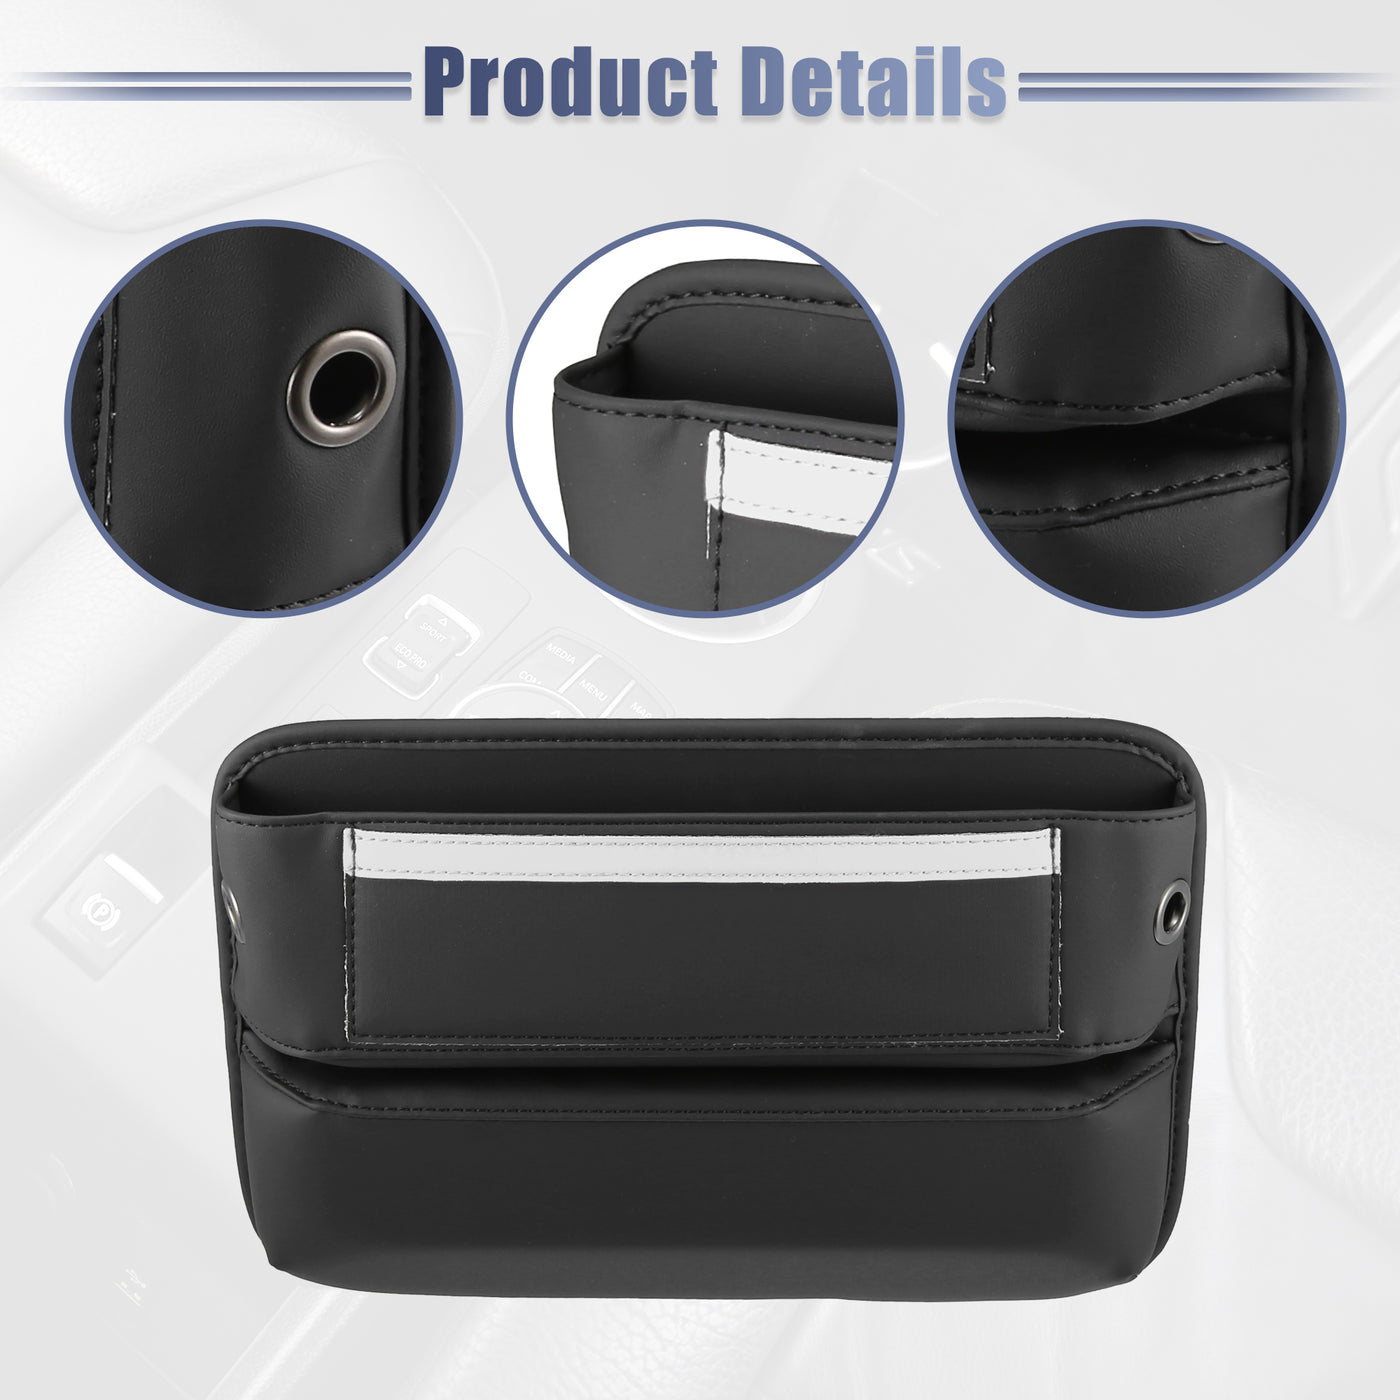 ACROPIX PU Leather Car Seat Gap Filler Multiple Pockets Car Seat Organizer Console Side Pocket Storage Box - Pack of 2